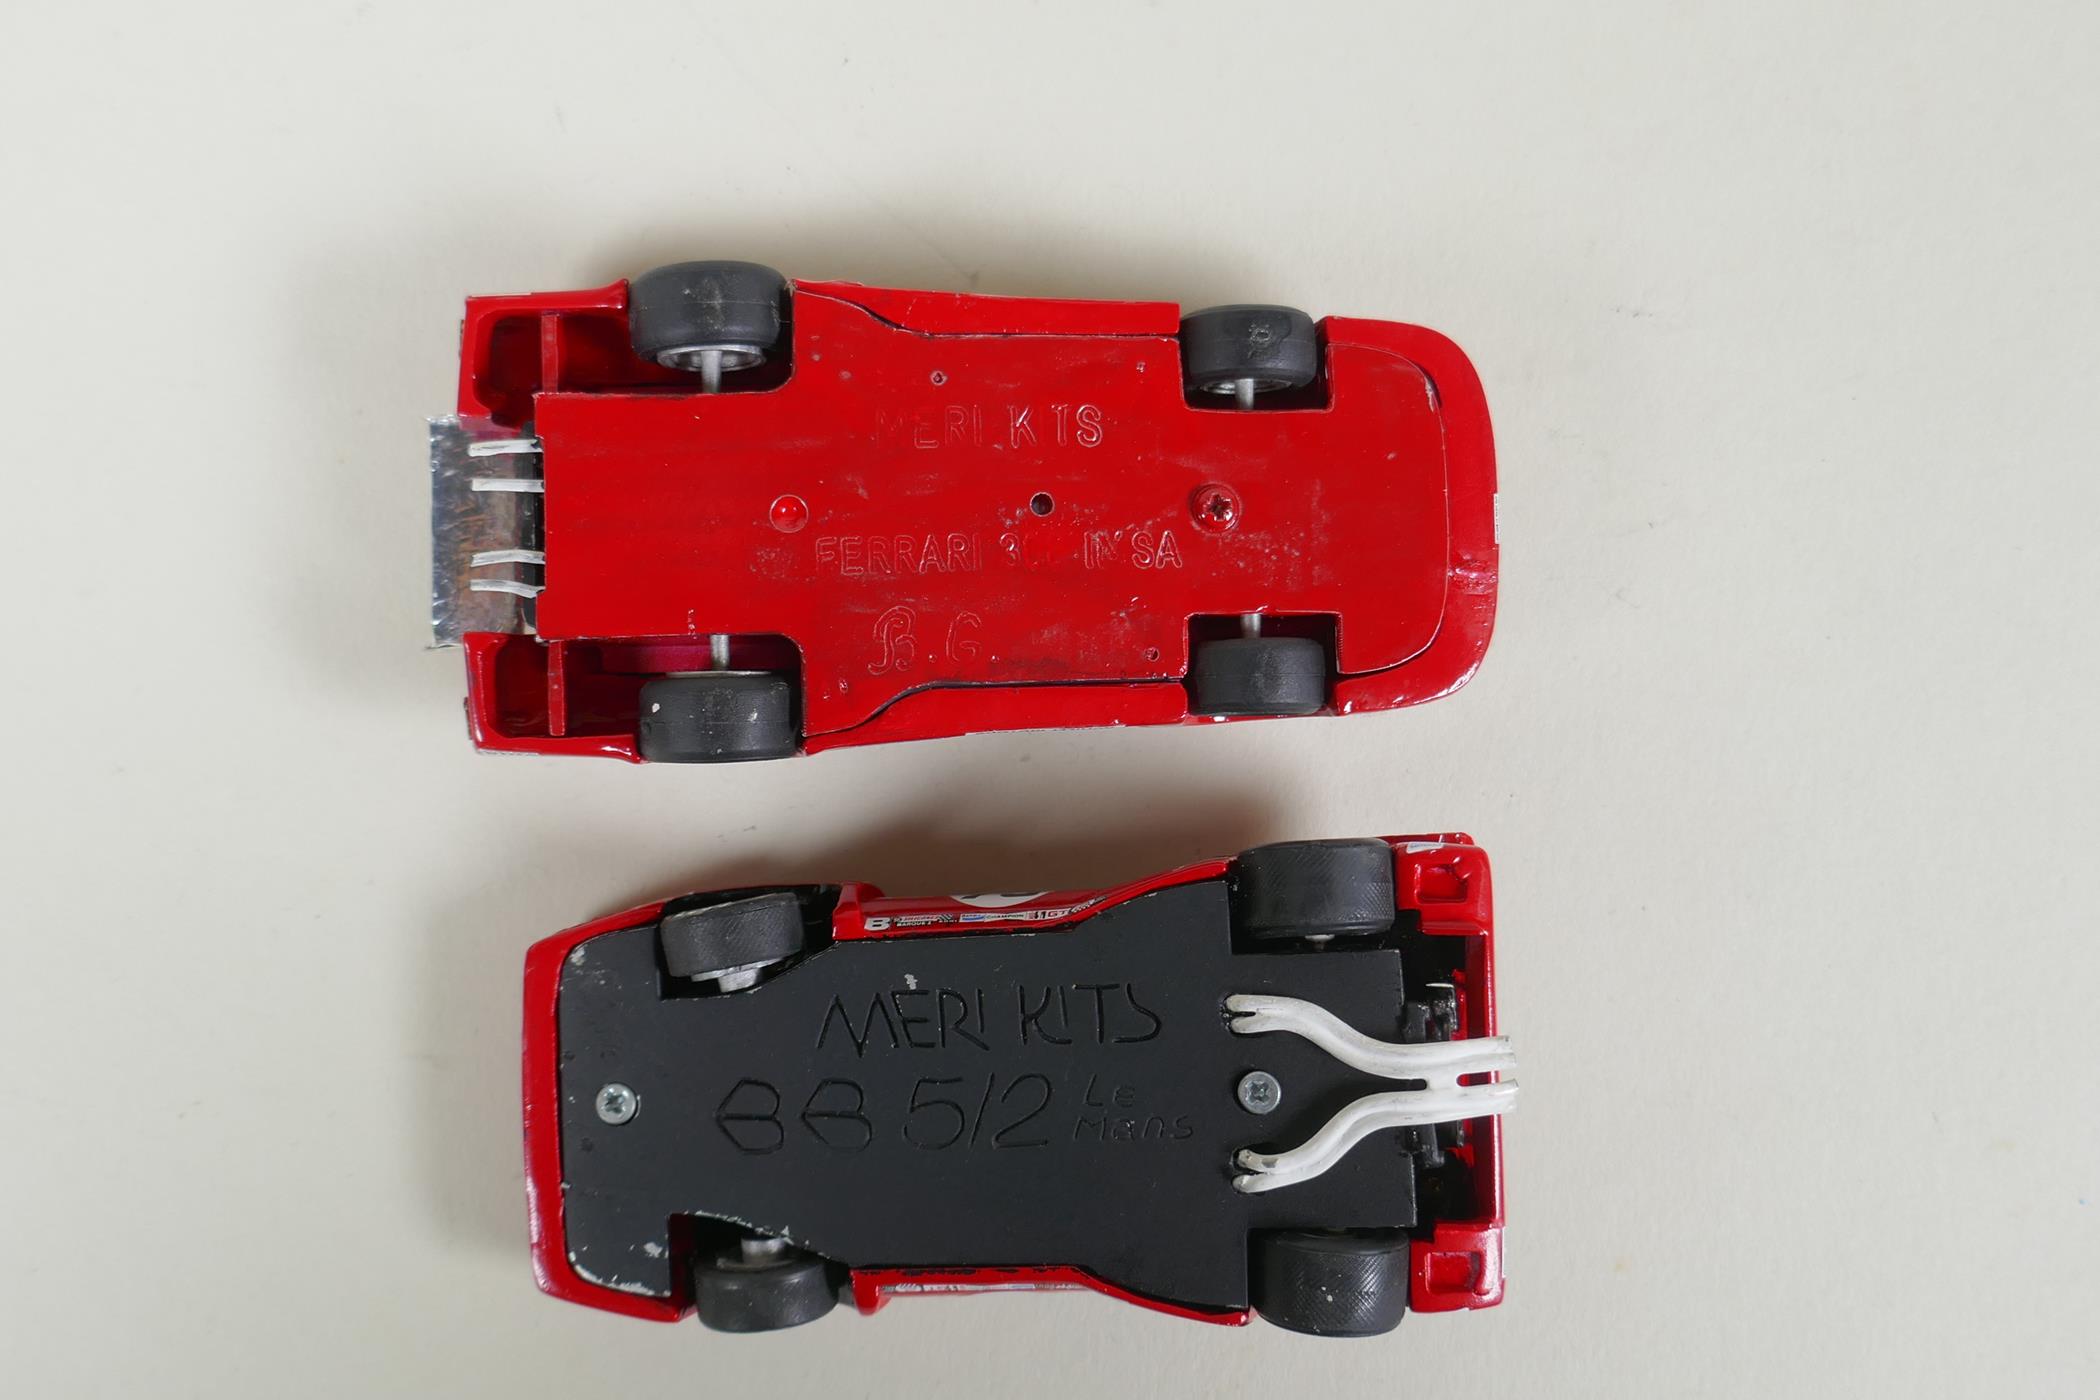 Eight 1:43 scale kit built model Ferrari cars by Hostaro MiniChamps and Meri Kit, including a - Image 9 of 9